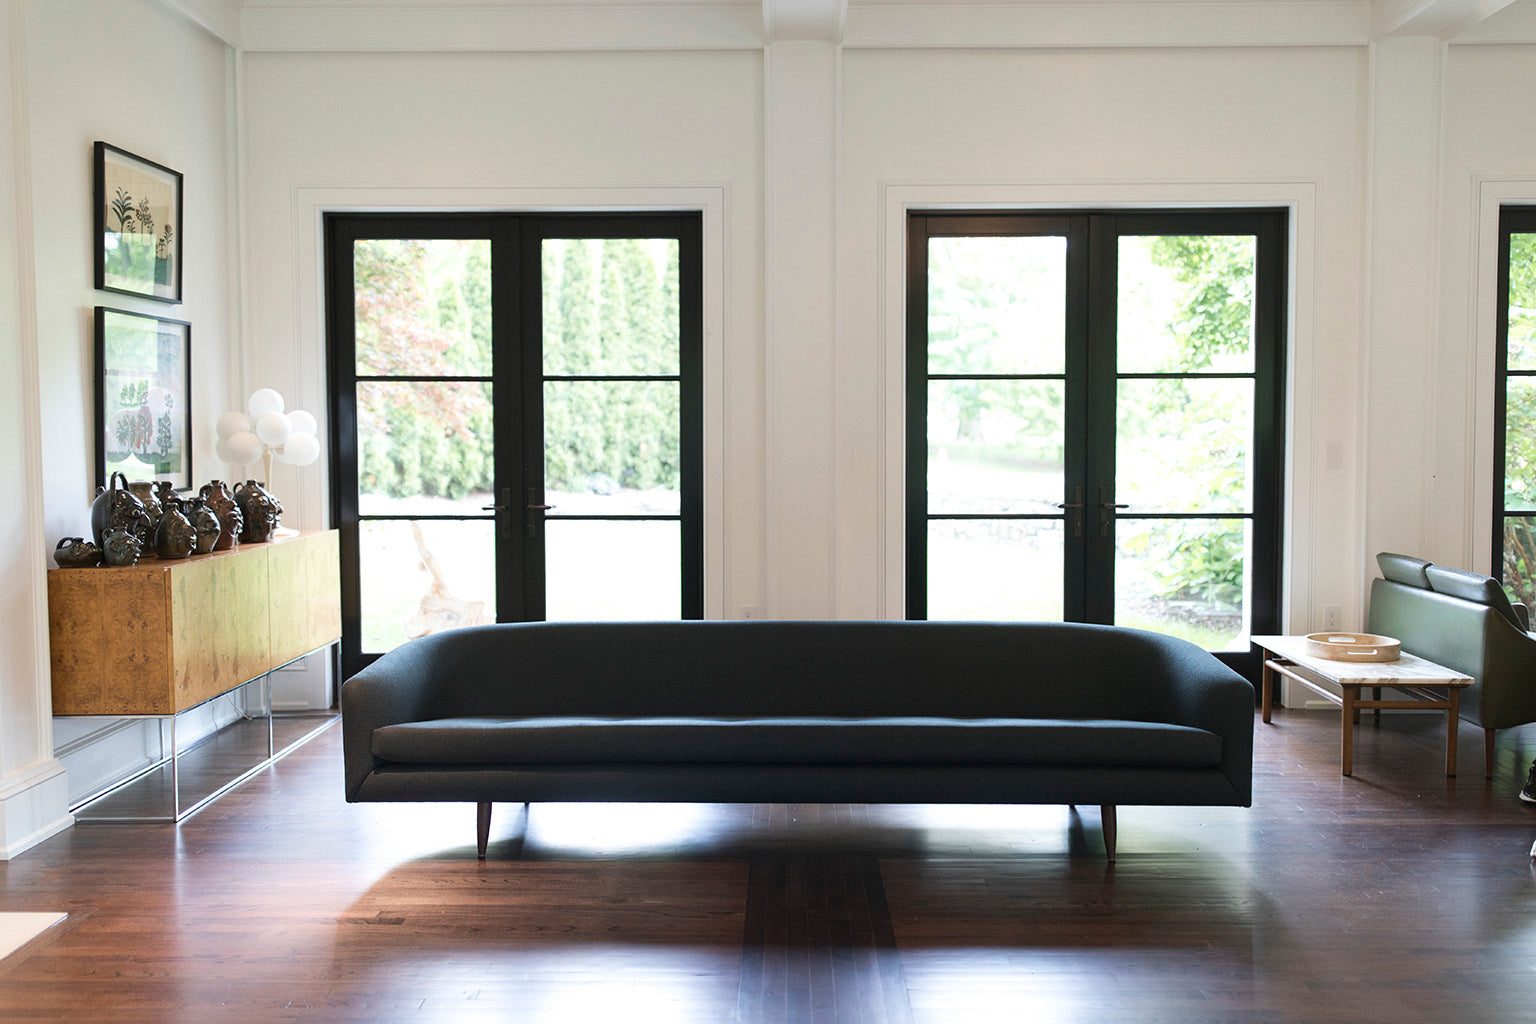 modern sofas for craft